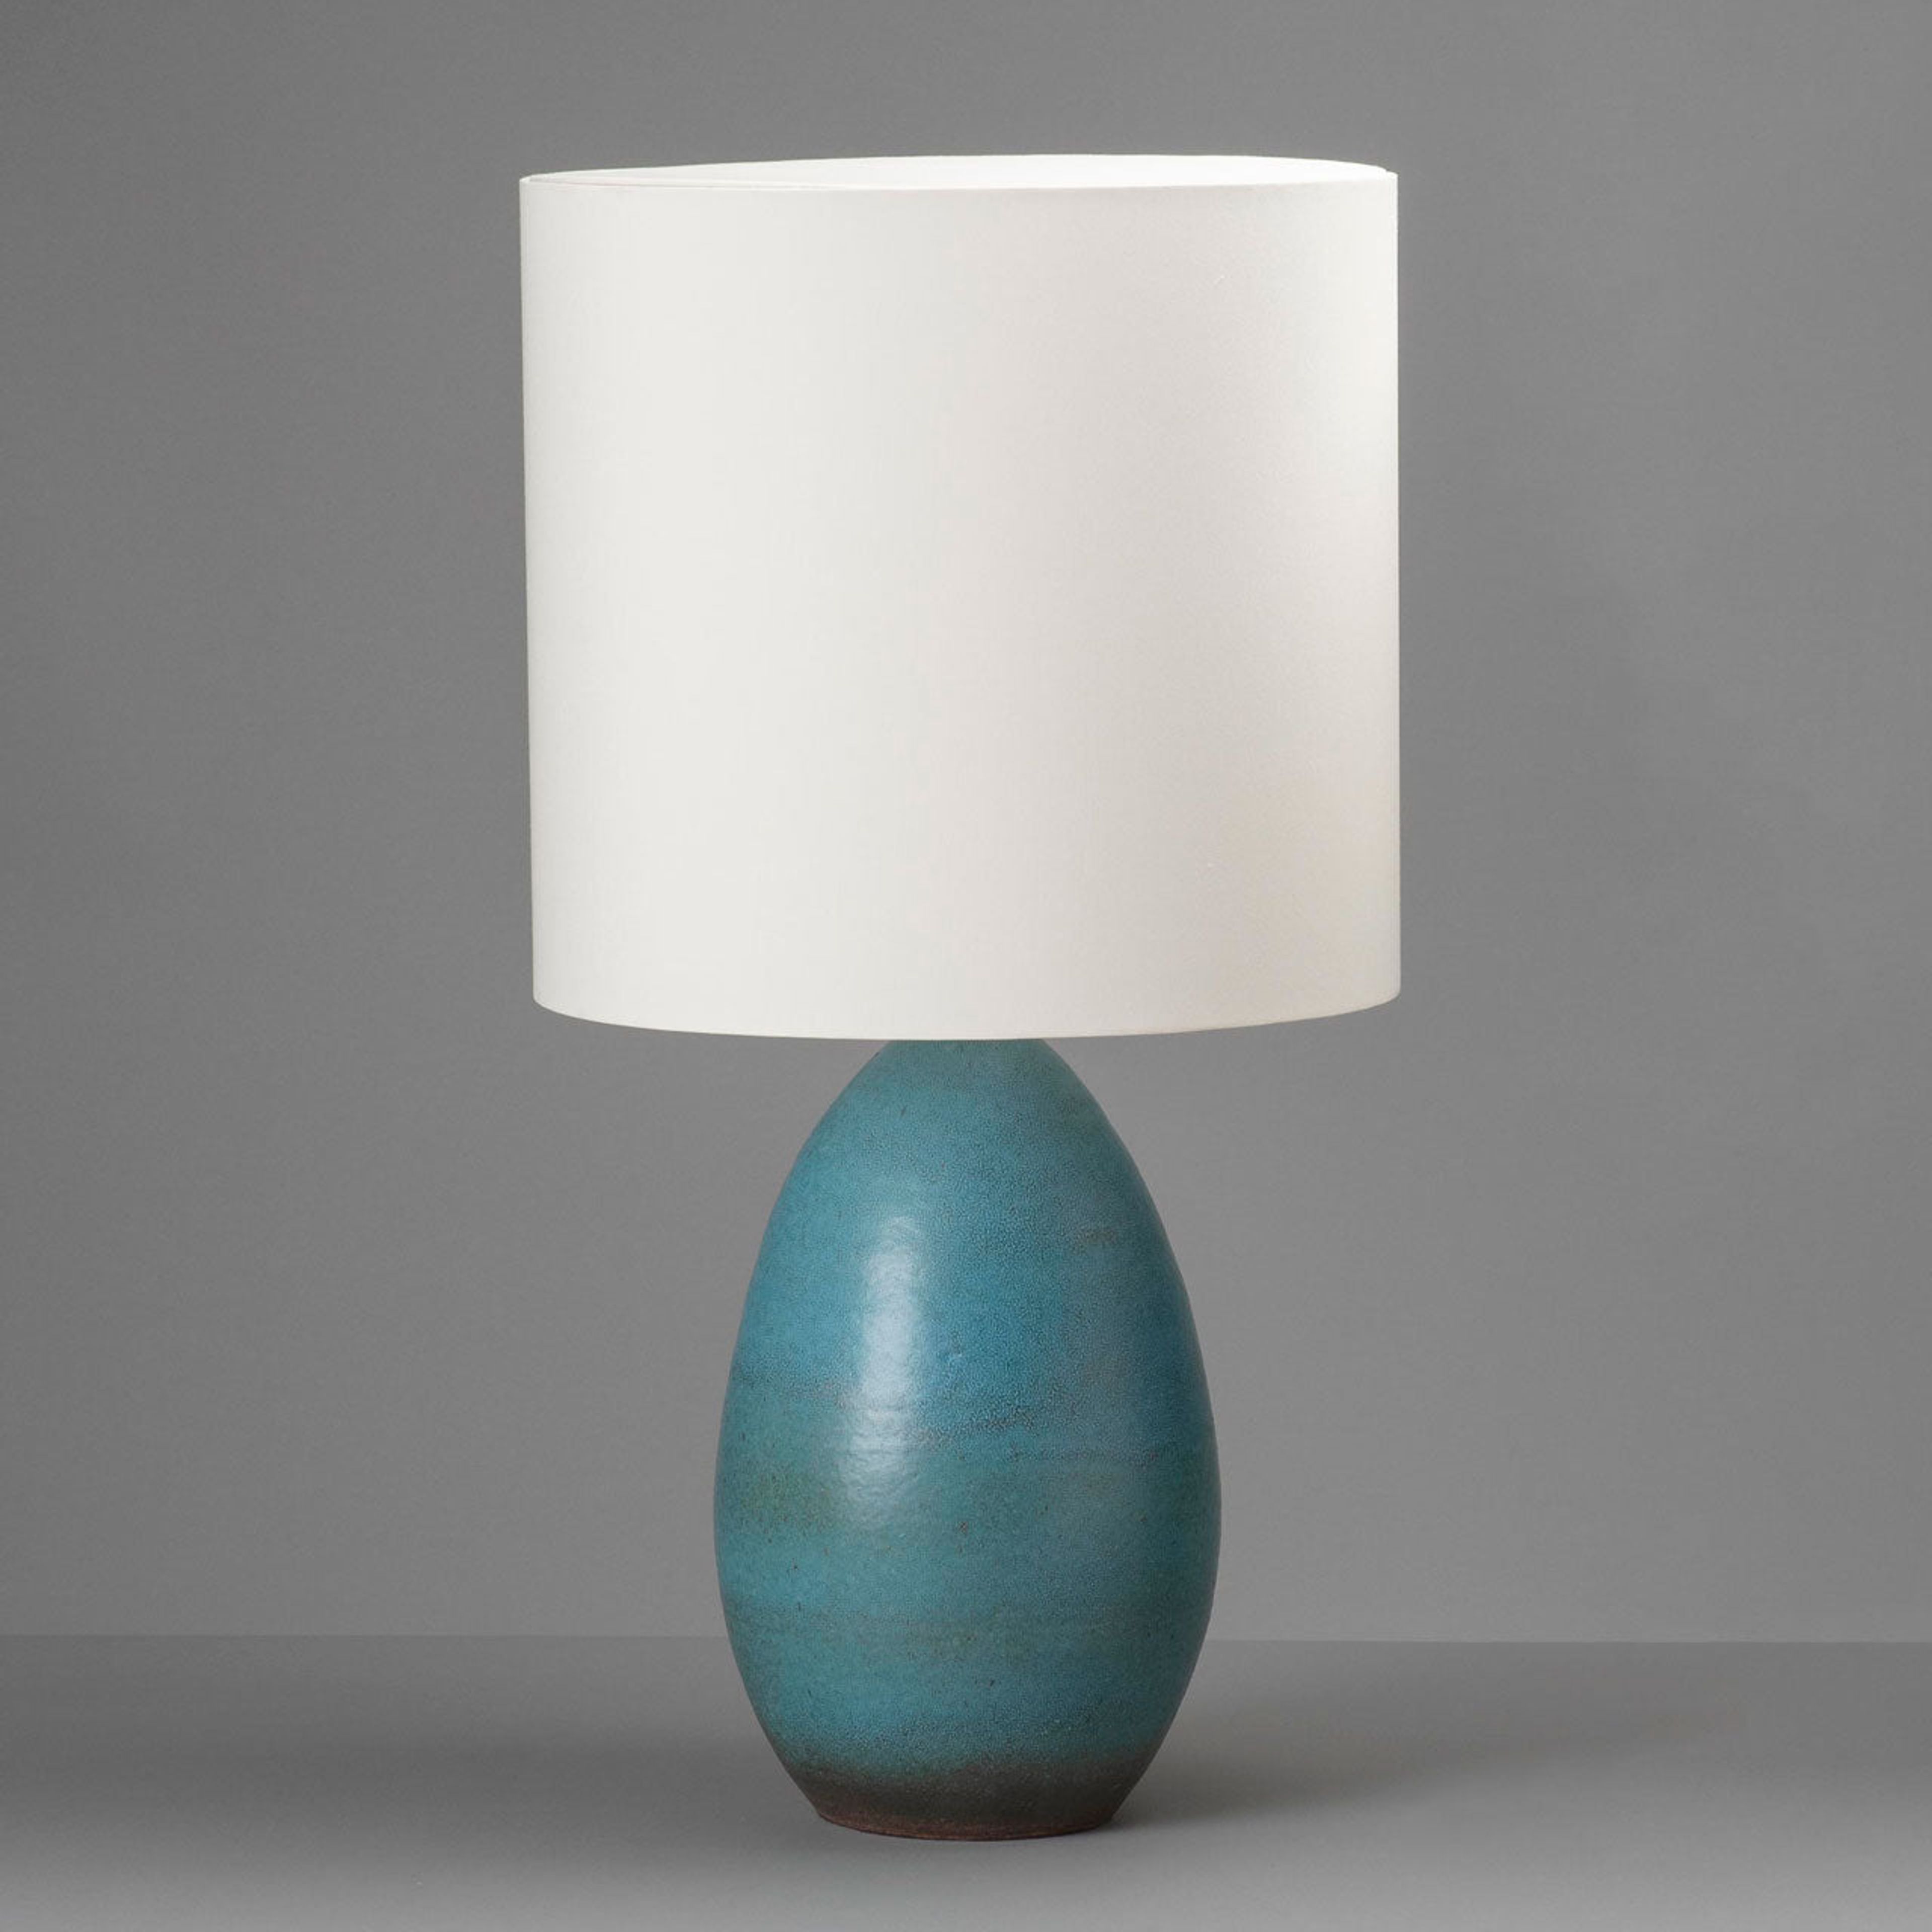 XL Egg-Shaped Table Lamp